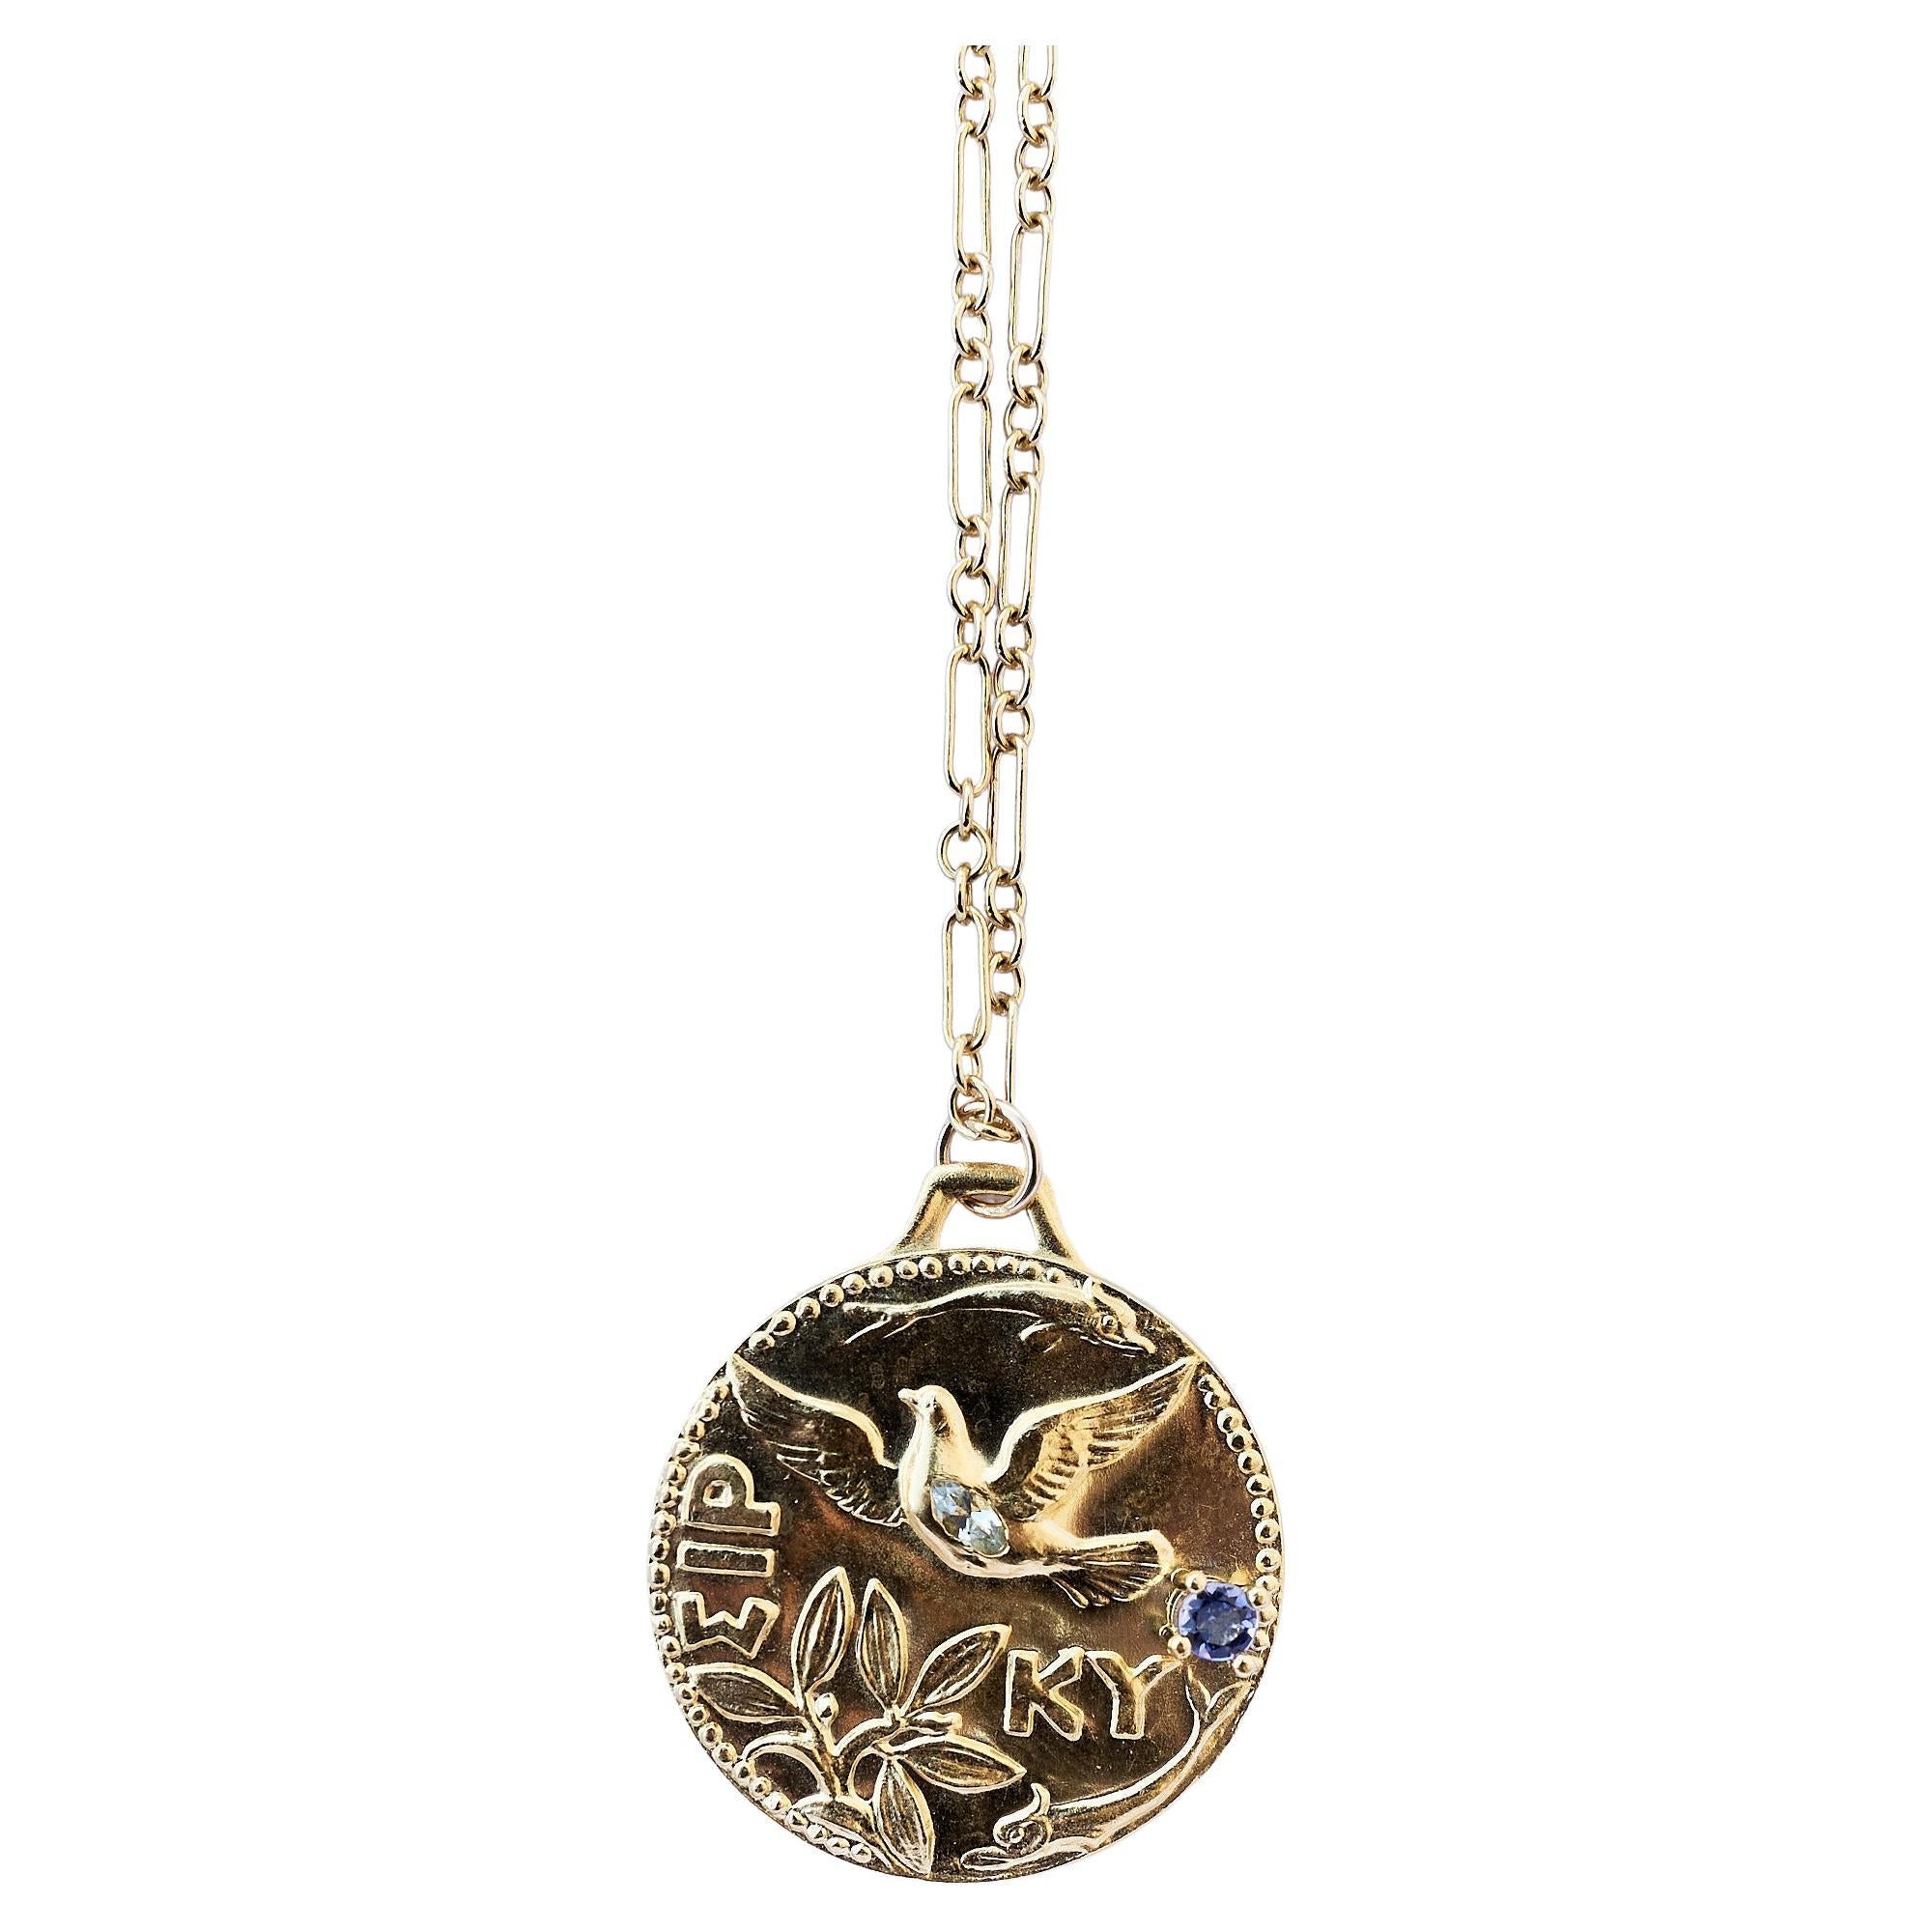 Taube Kette Halskette Aquamarin Blau Turmalin Medaille J Dauphin

Chunky Kette in Gold gefüllt 24